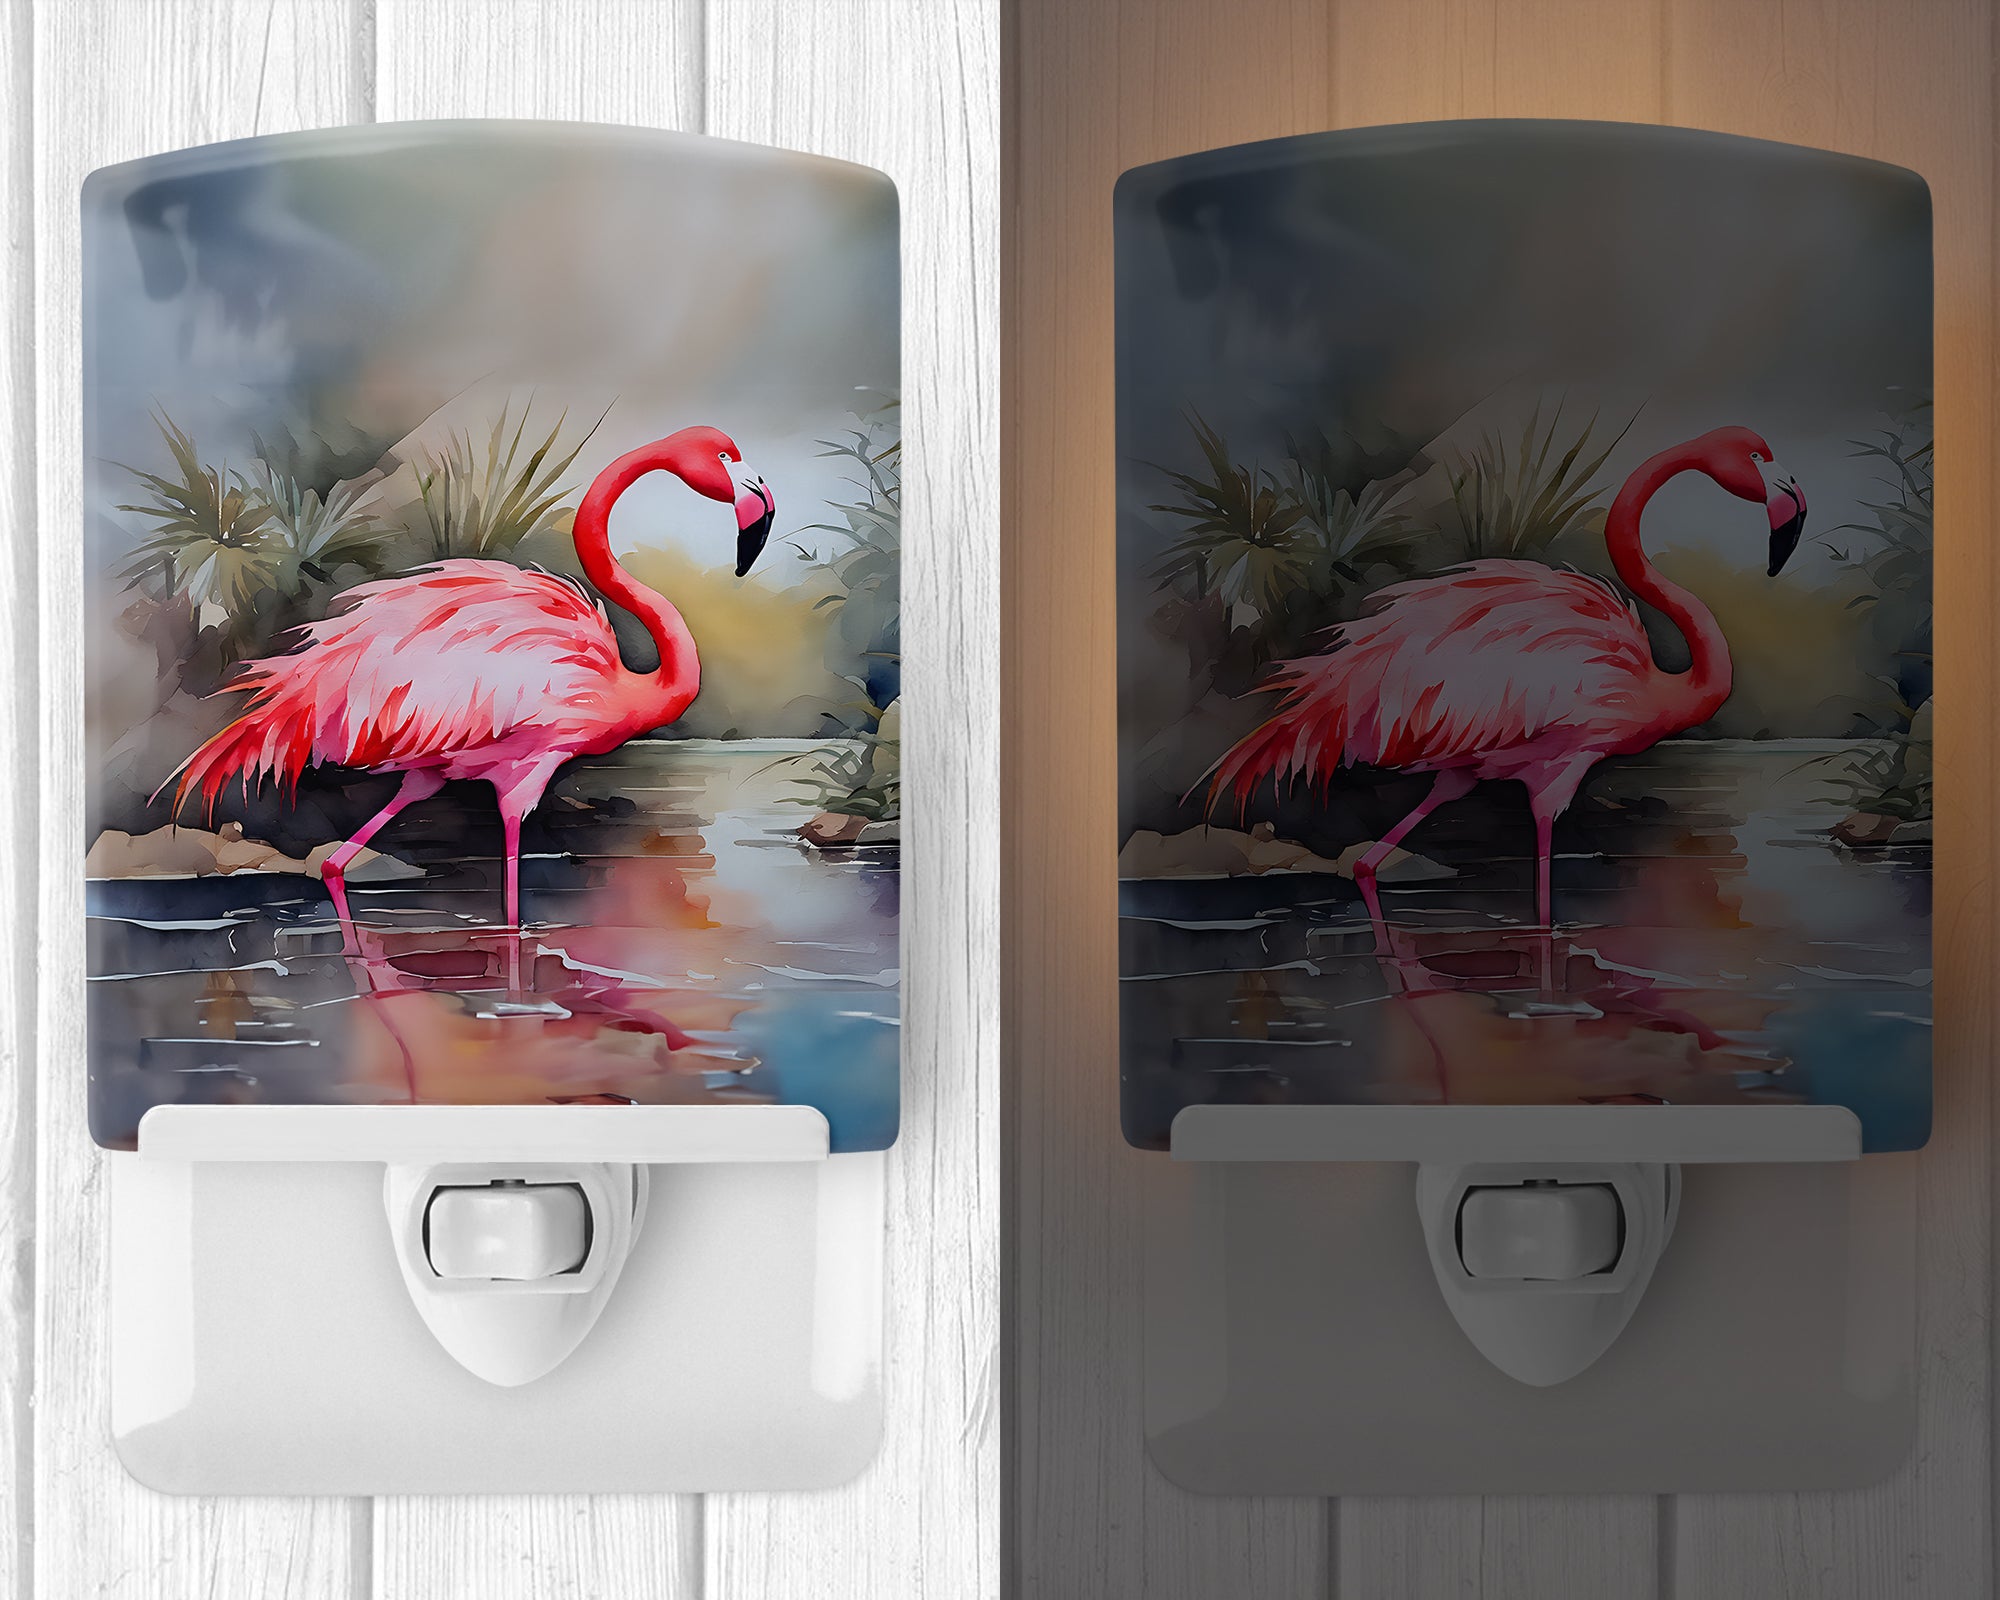 Buy this Flamingo Ceramic Night Light